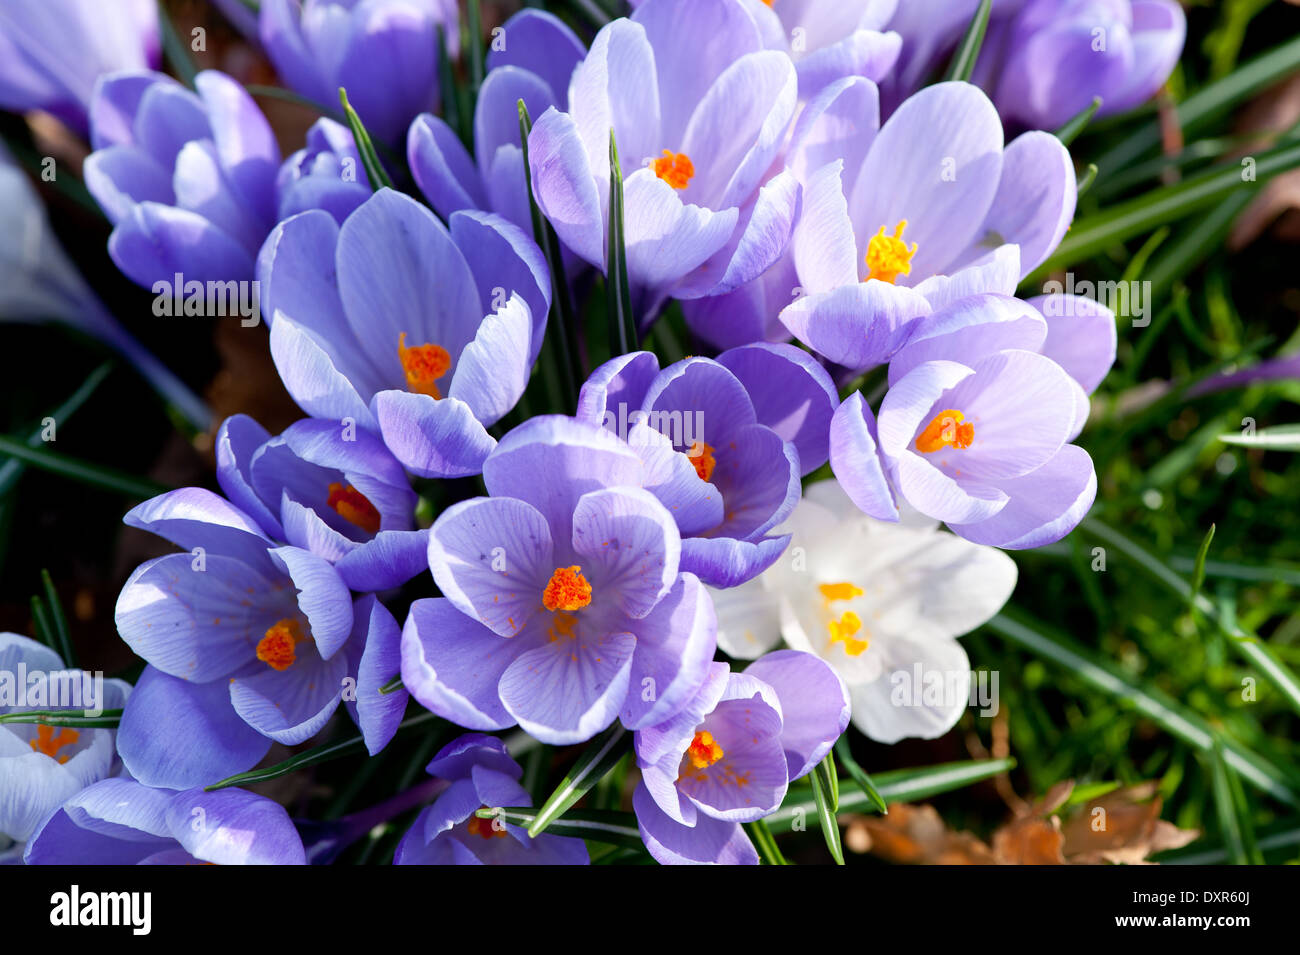 Purple and white crocus flowers Stock Photo